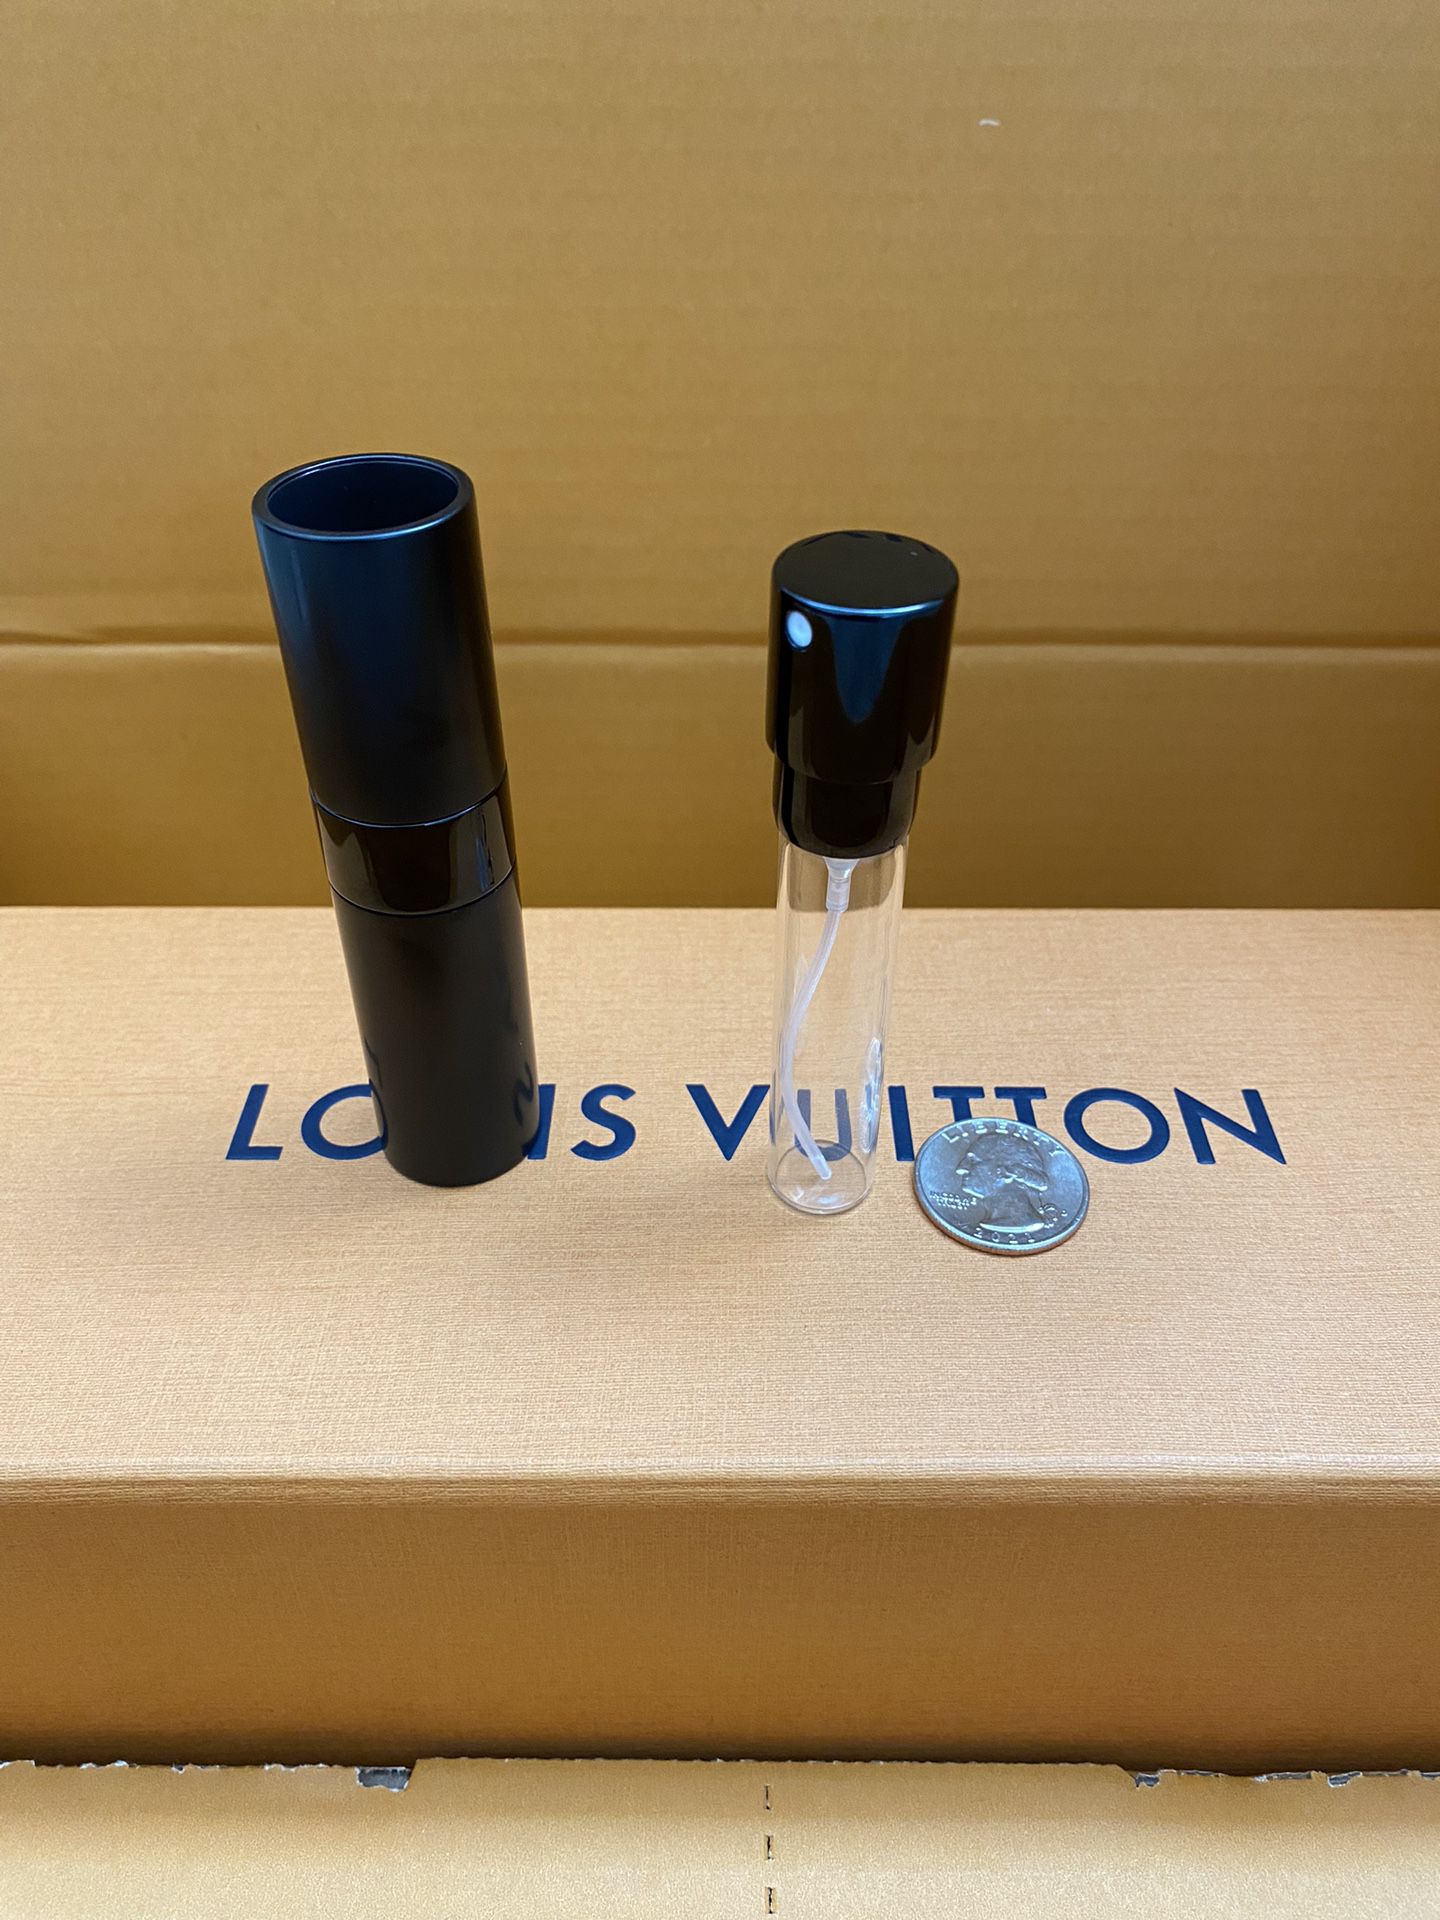 Louis Vuitton California Dream Perfume for Sale in Las Vegas, NV - OfferUp